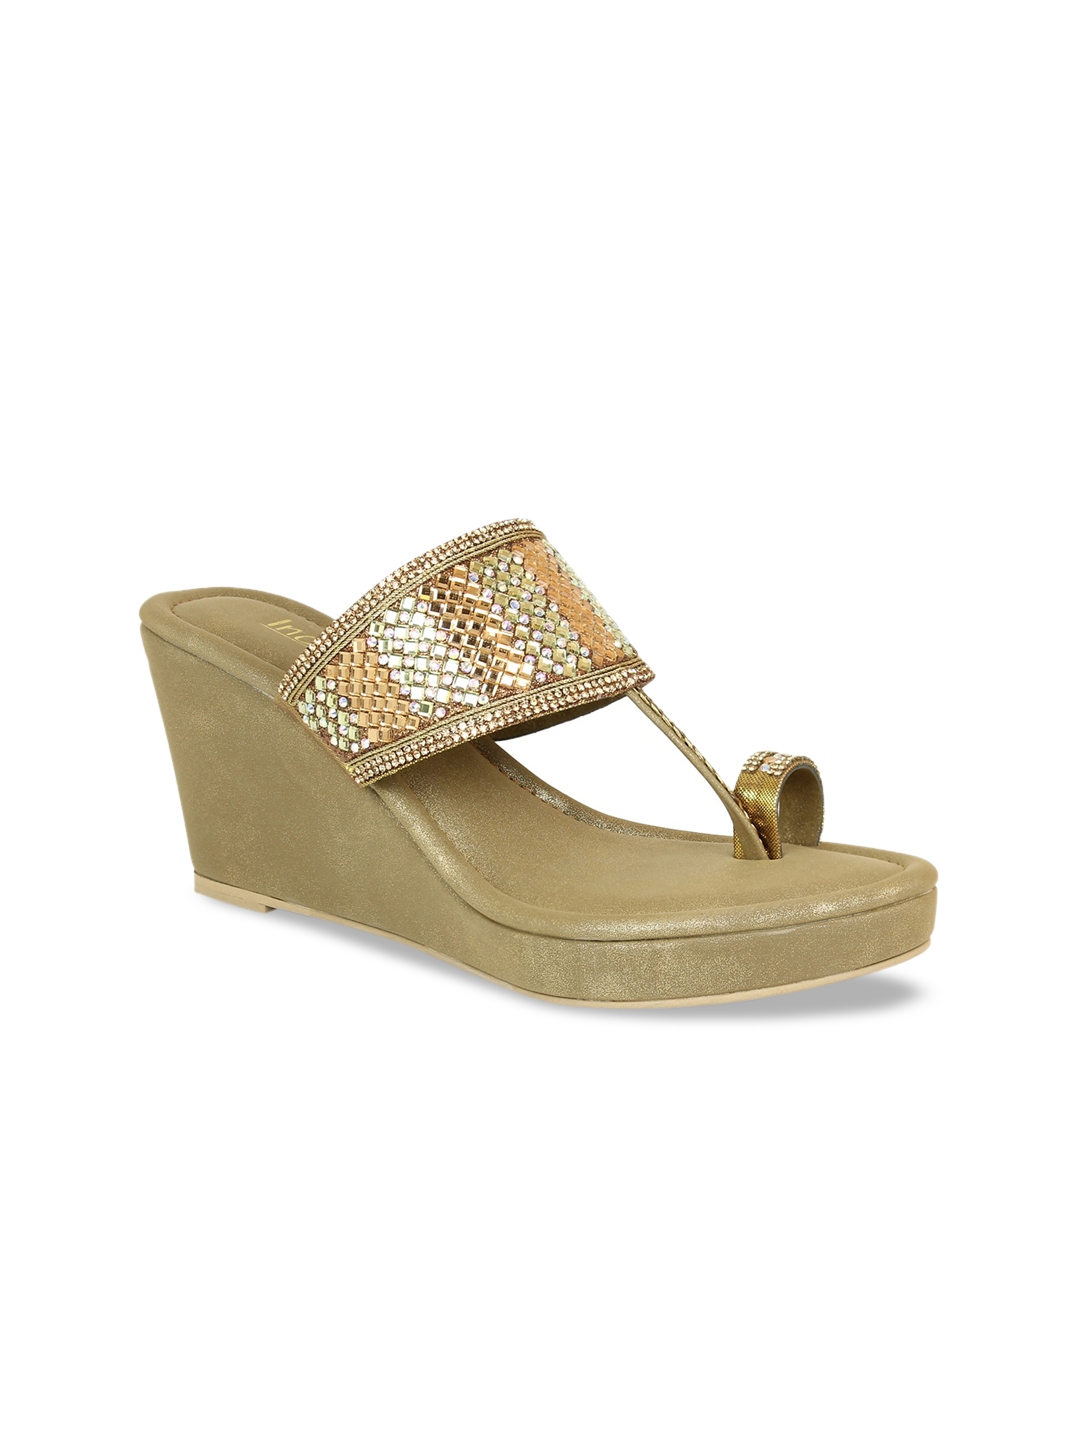 Buy Inc 5 Gold Toned Embellished Ethnic Wedge Sandals - Heels for Women ...